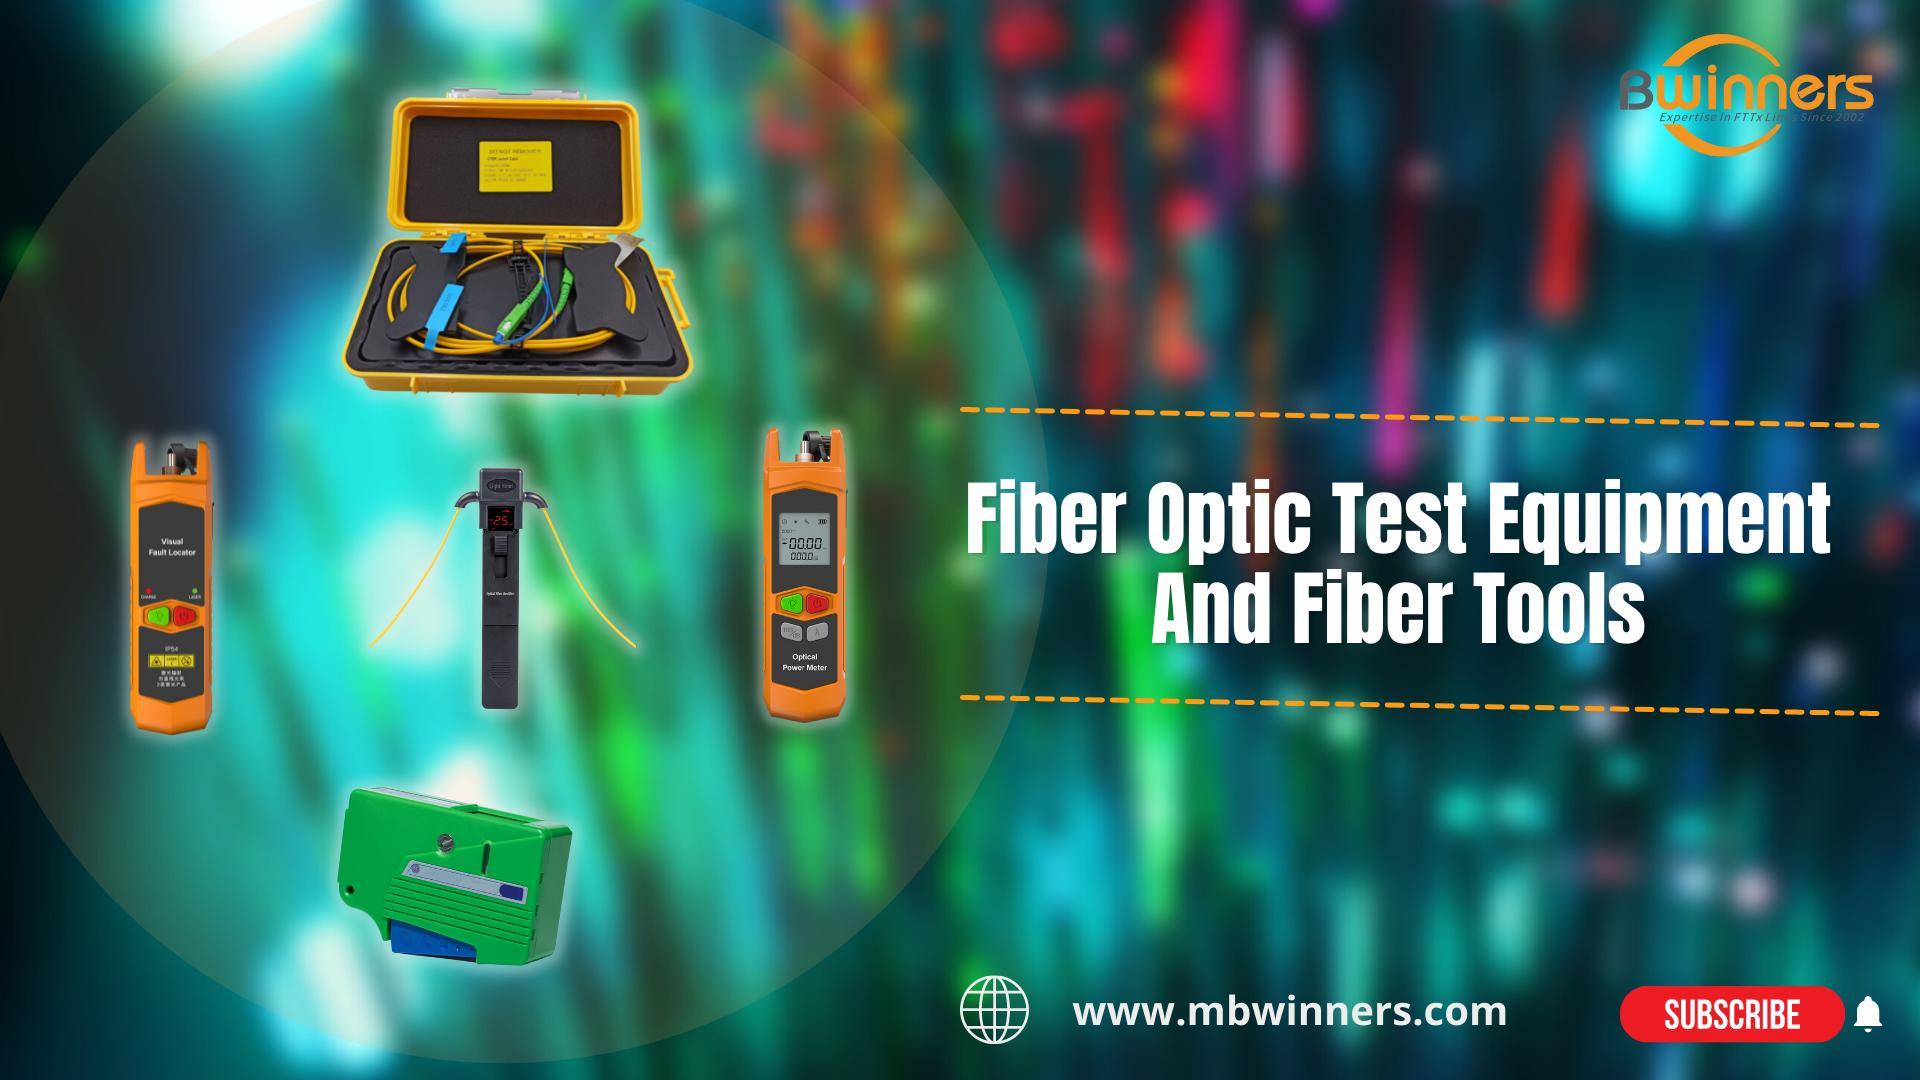 BWN-OTDR-LC2 волокна запуска запуска | Идентификатор живого волокна MBN-OFI-35 | MBN-VFL-30-C VFL волокна | MBN-OPM-Mini Mini Power Meter | Очиститель волокна MBN-OCT | Волоконно-оптическое испытательное оборудование и волокна | #Ftth #fttx |. Bwinners.